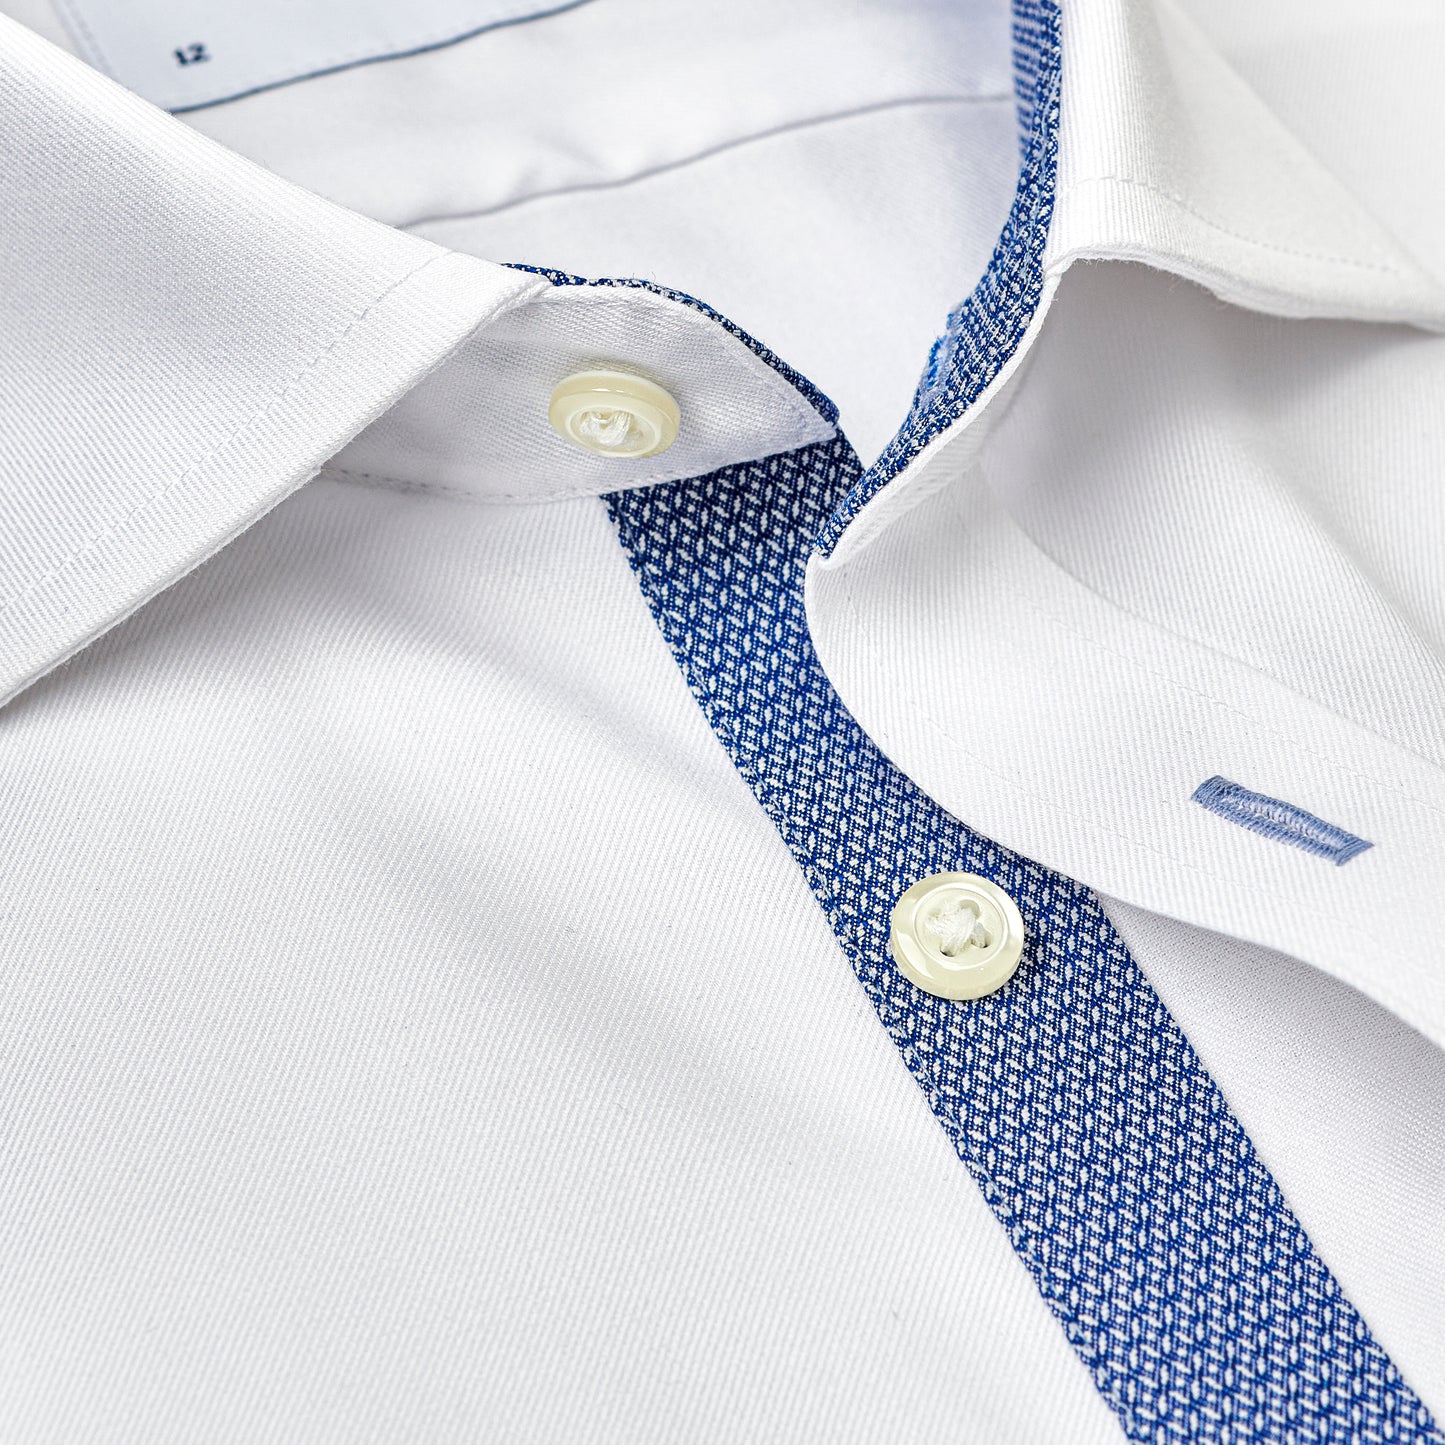 CLEAN Boys Twill NON IRON Cutaway Collar Shirt Long Sleeves with Blue Diamond Contrast Fabric